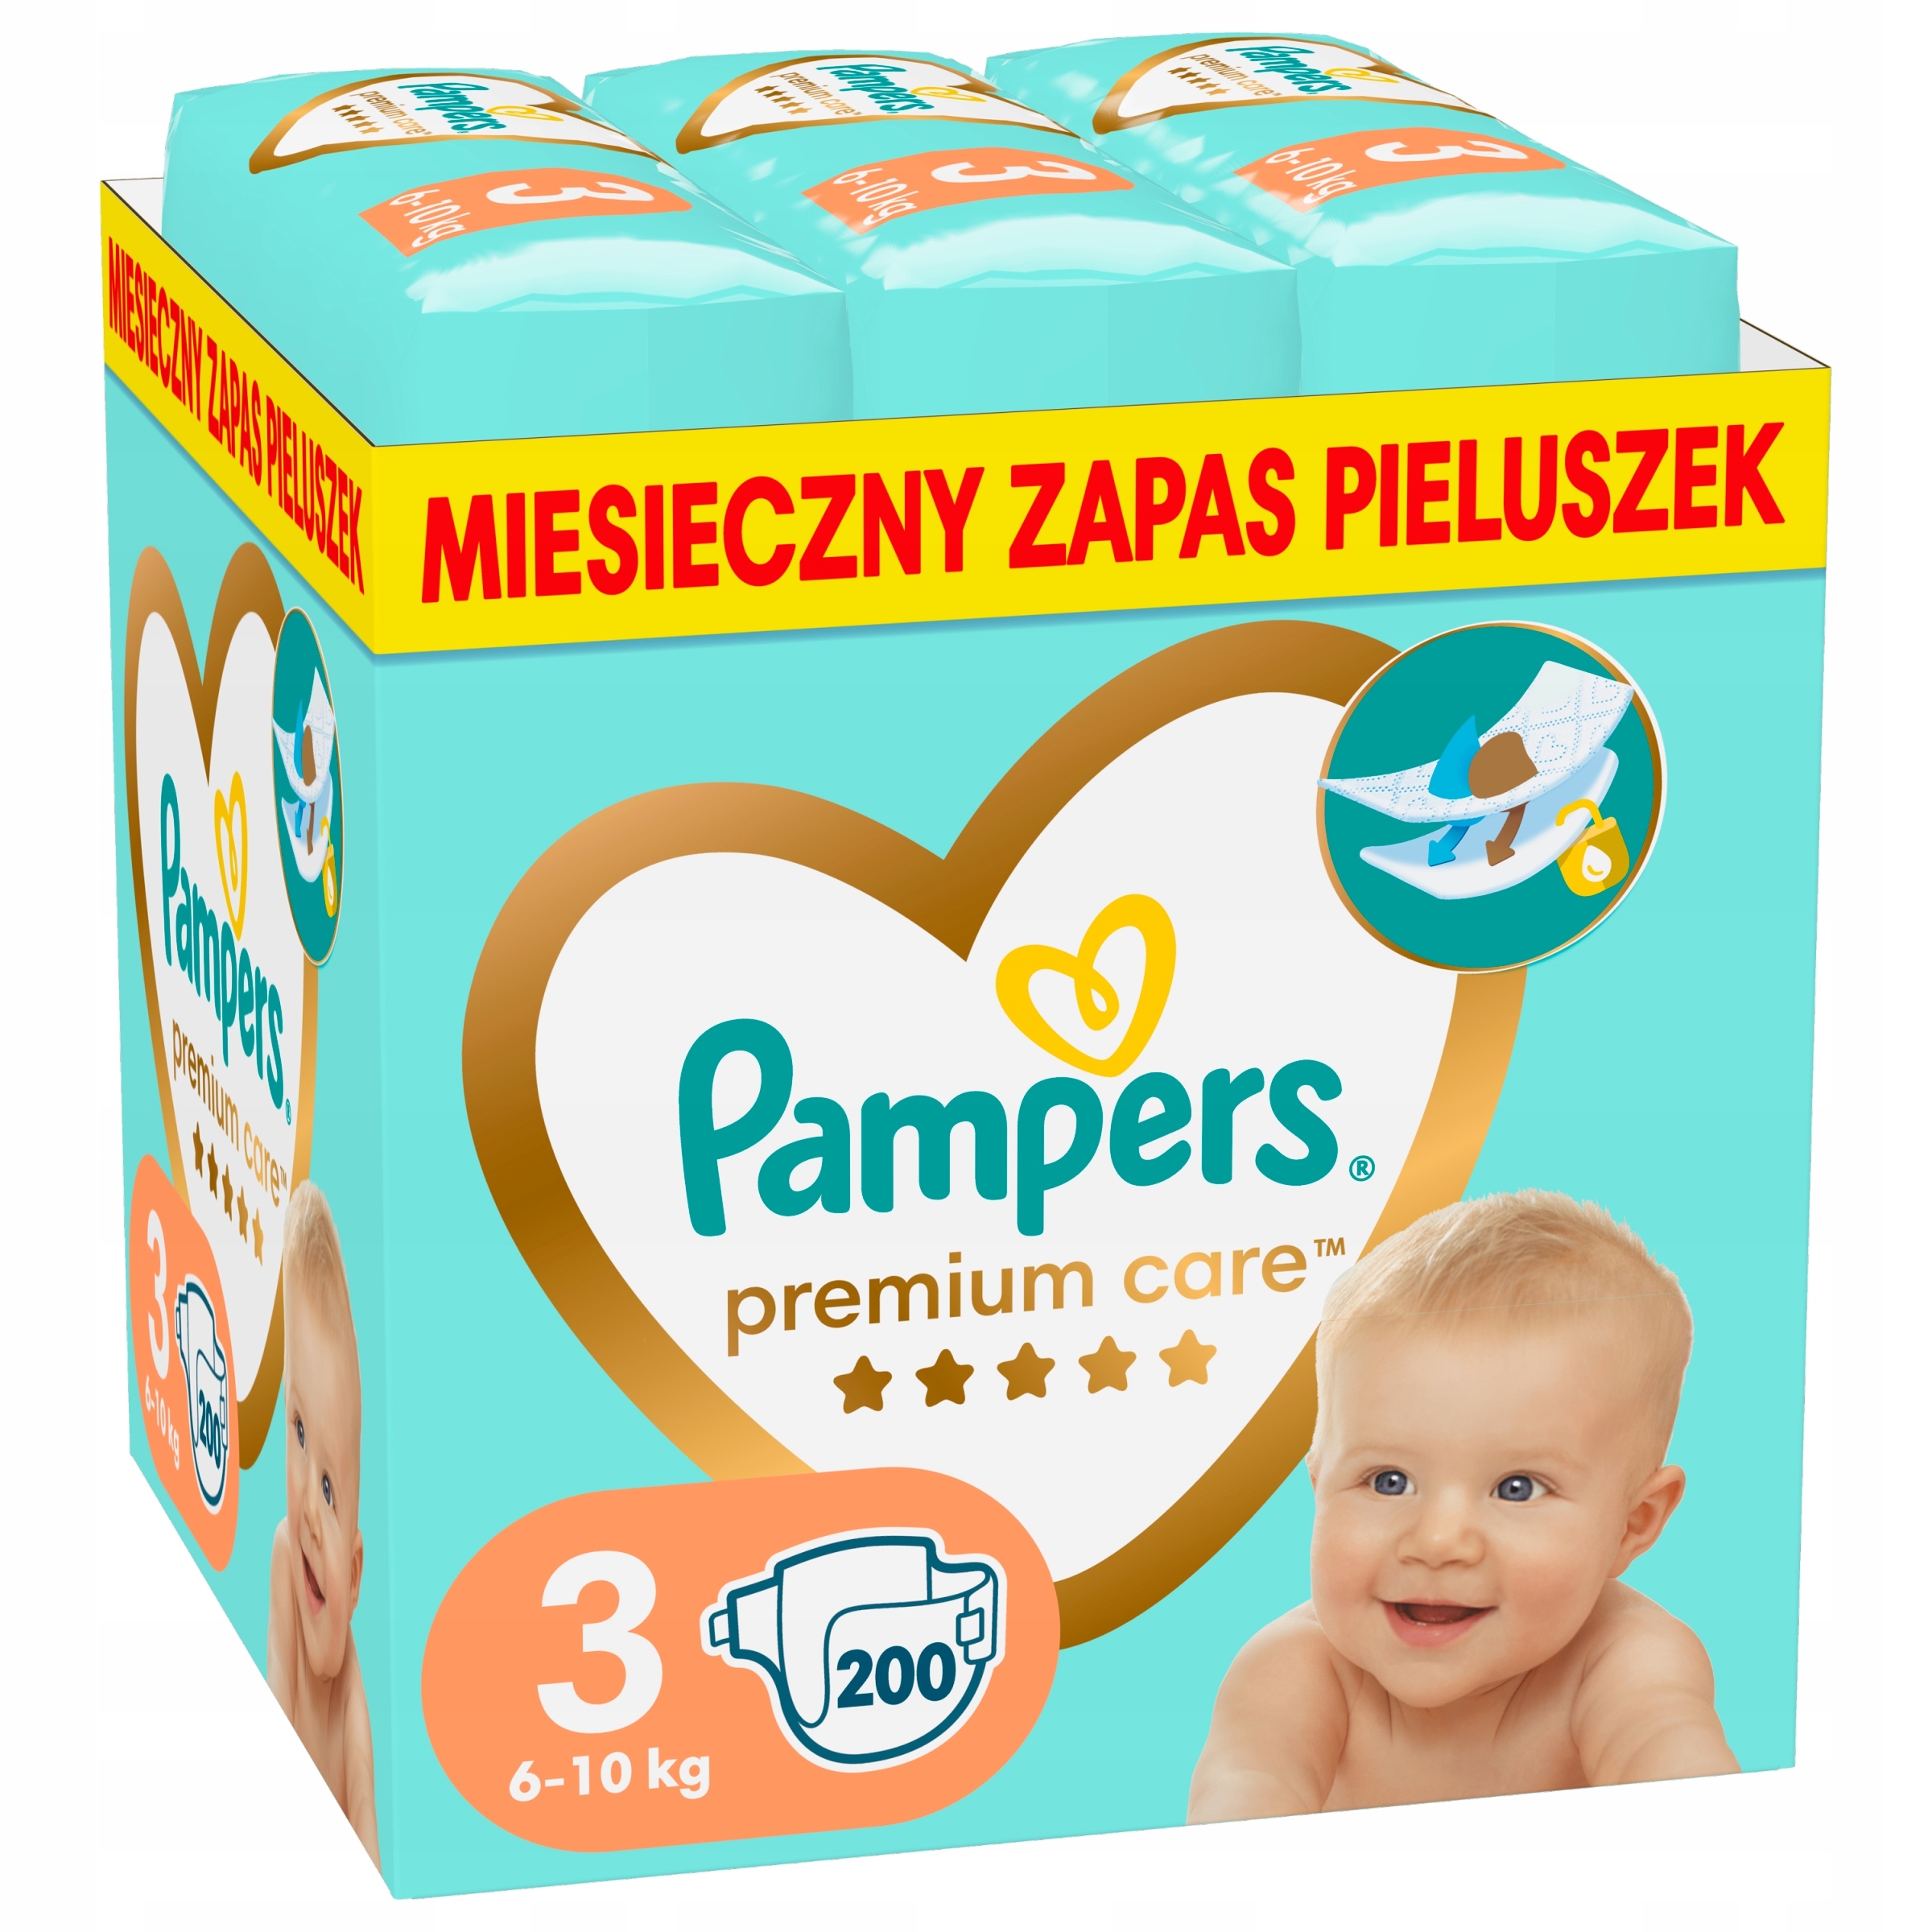 pampers site allegro.pl